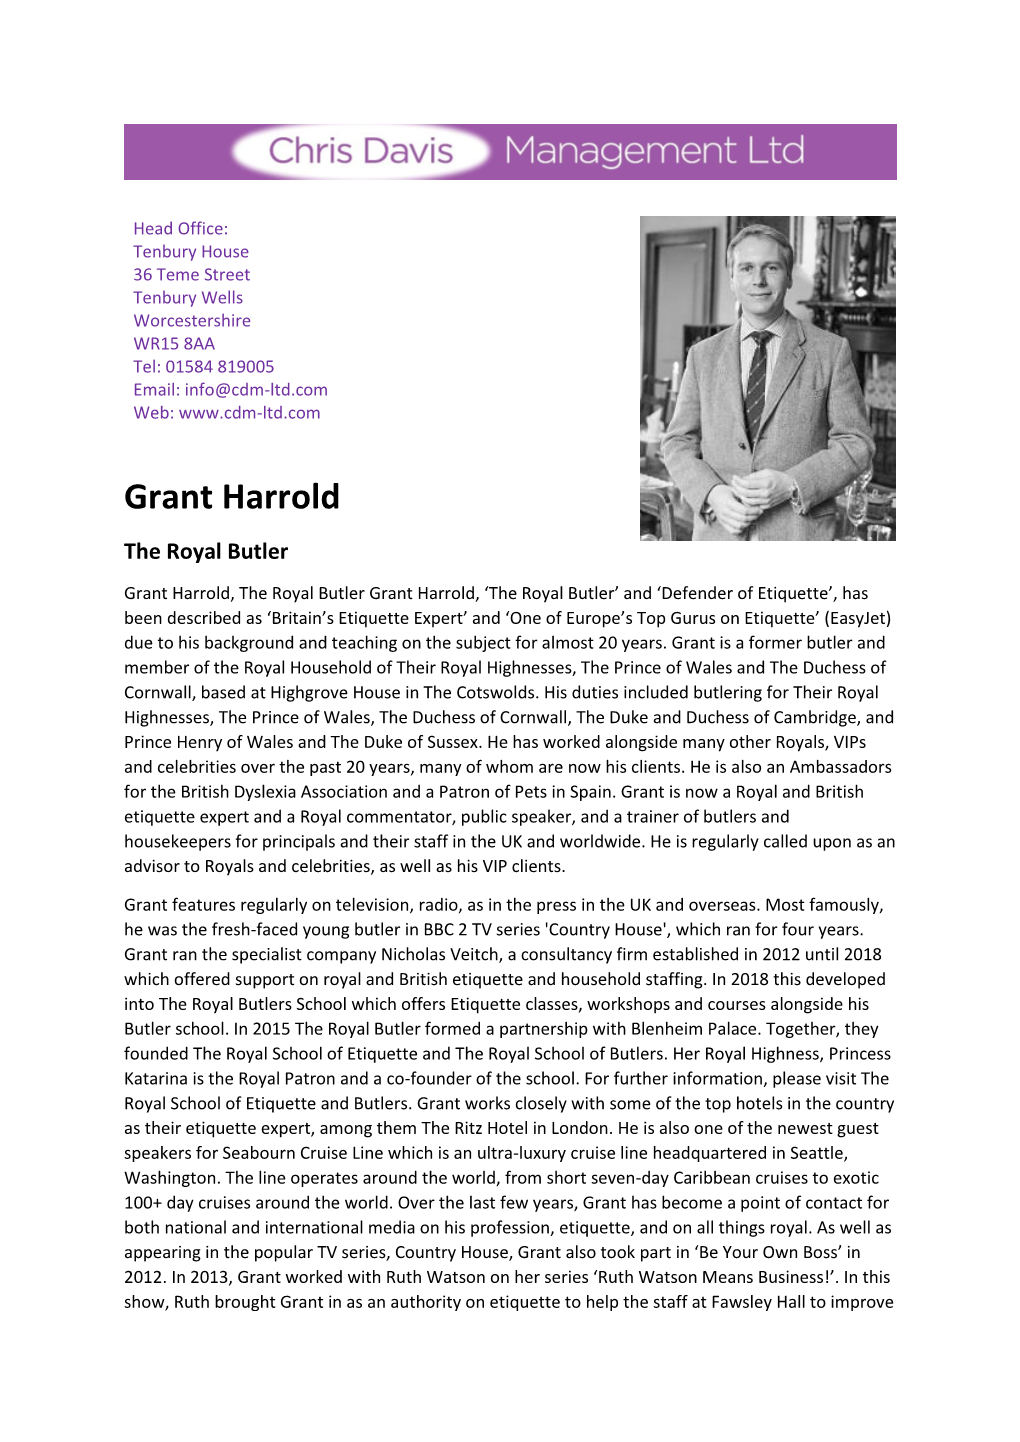 Grant Harrold the Royal Butler